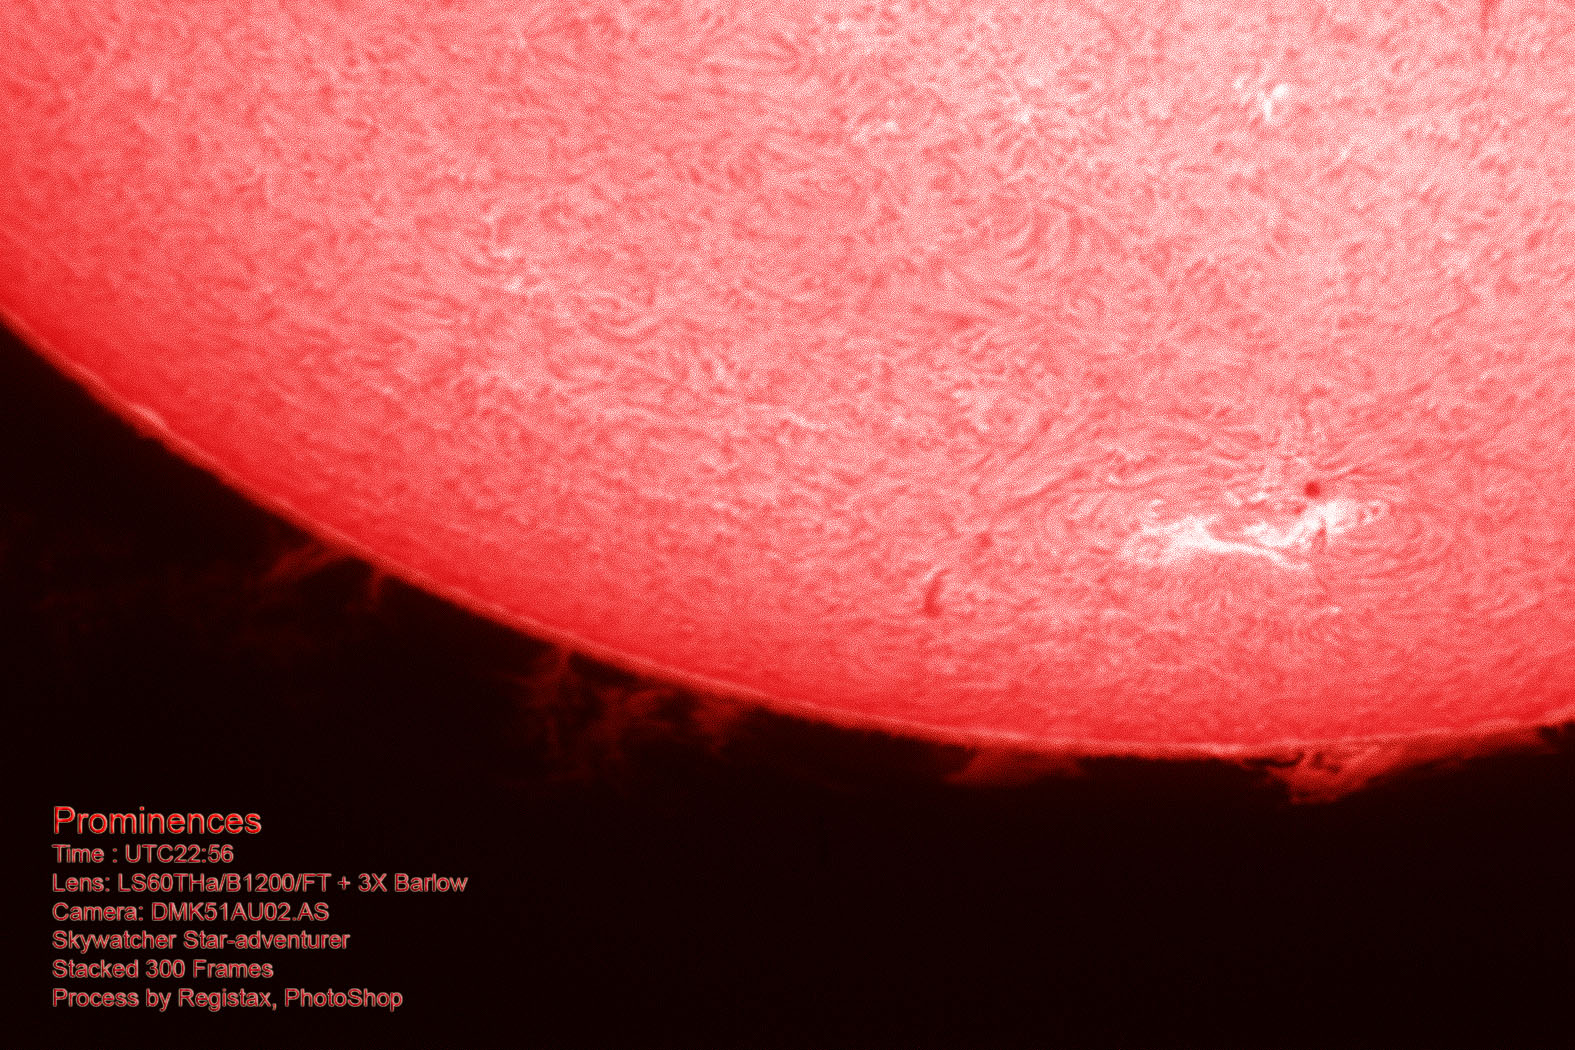 Prominences 20140601 06-56-19.jpg